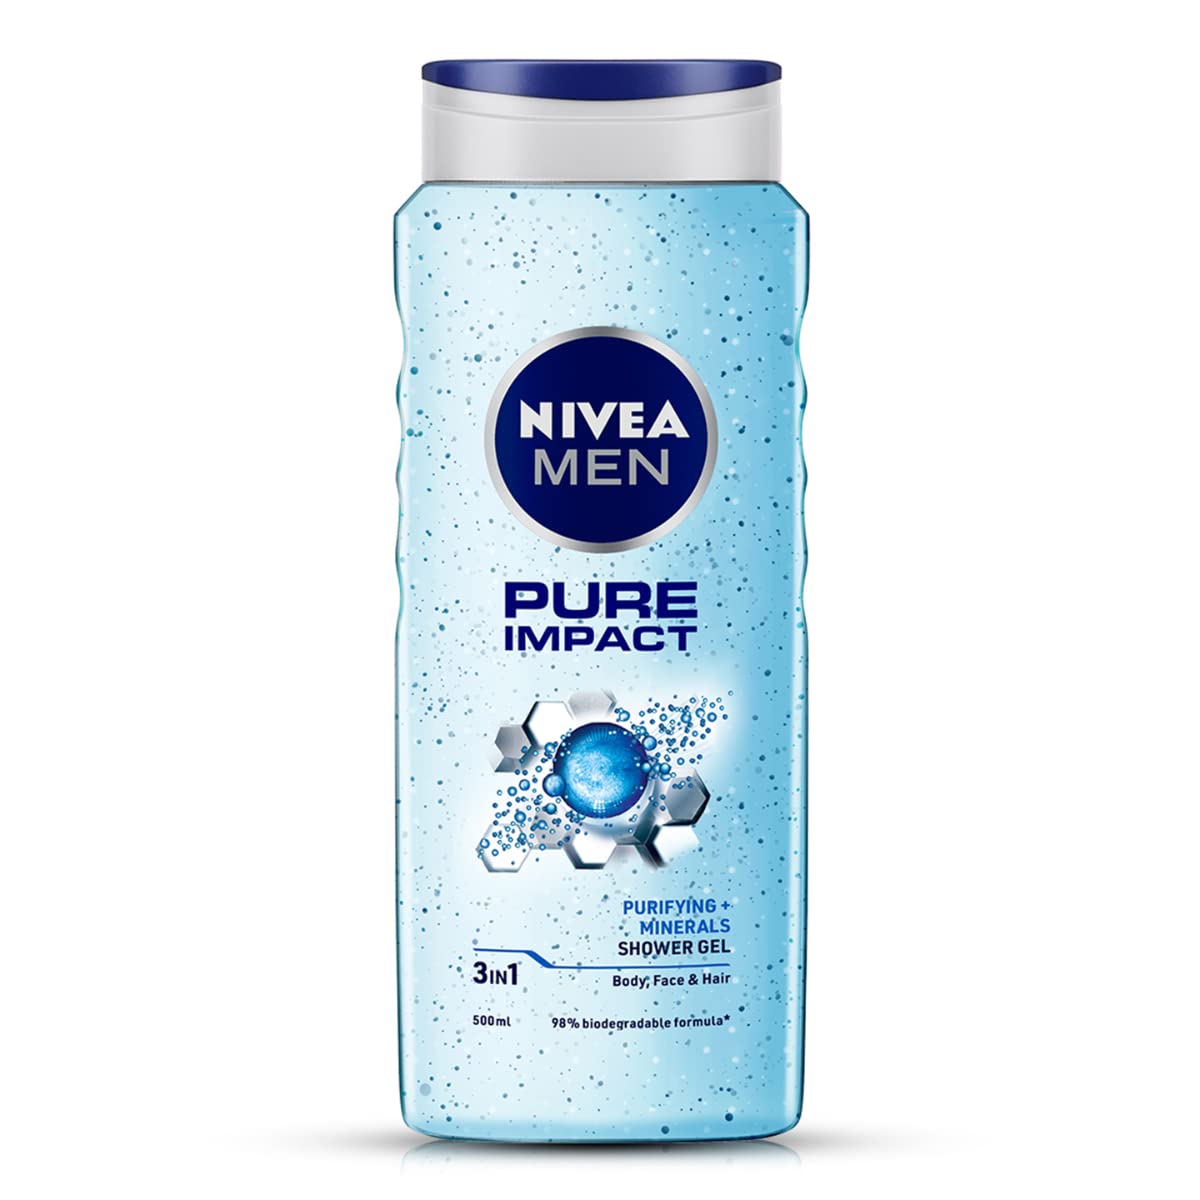 Nivea Men Pure Impact Purifying + Minerals Shower Gel 500ml